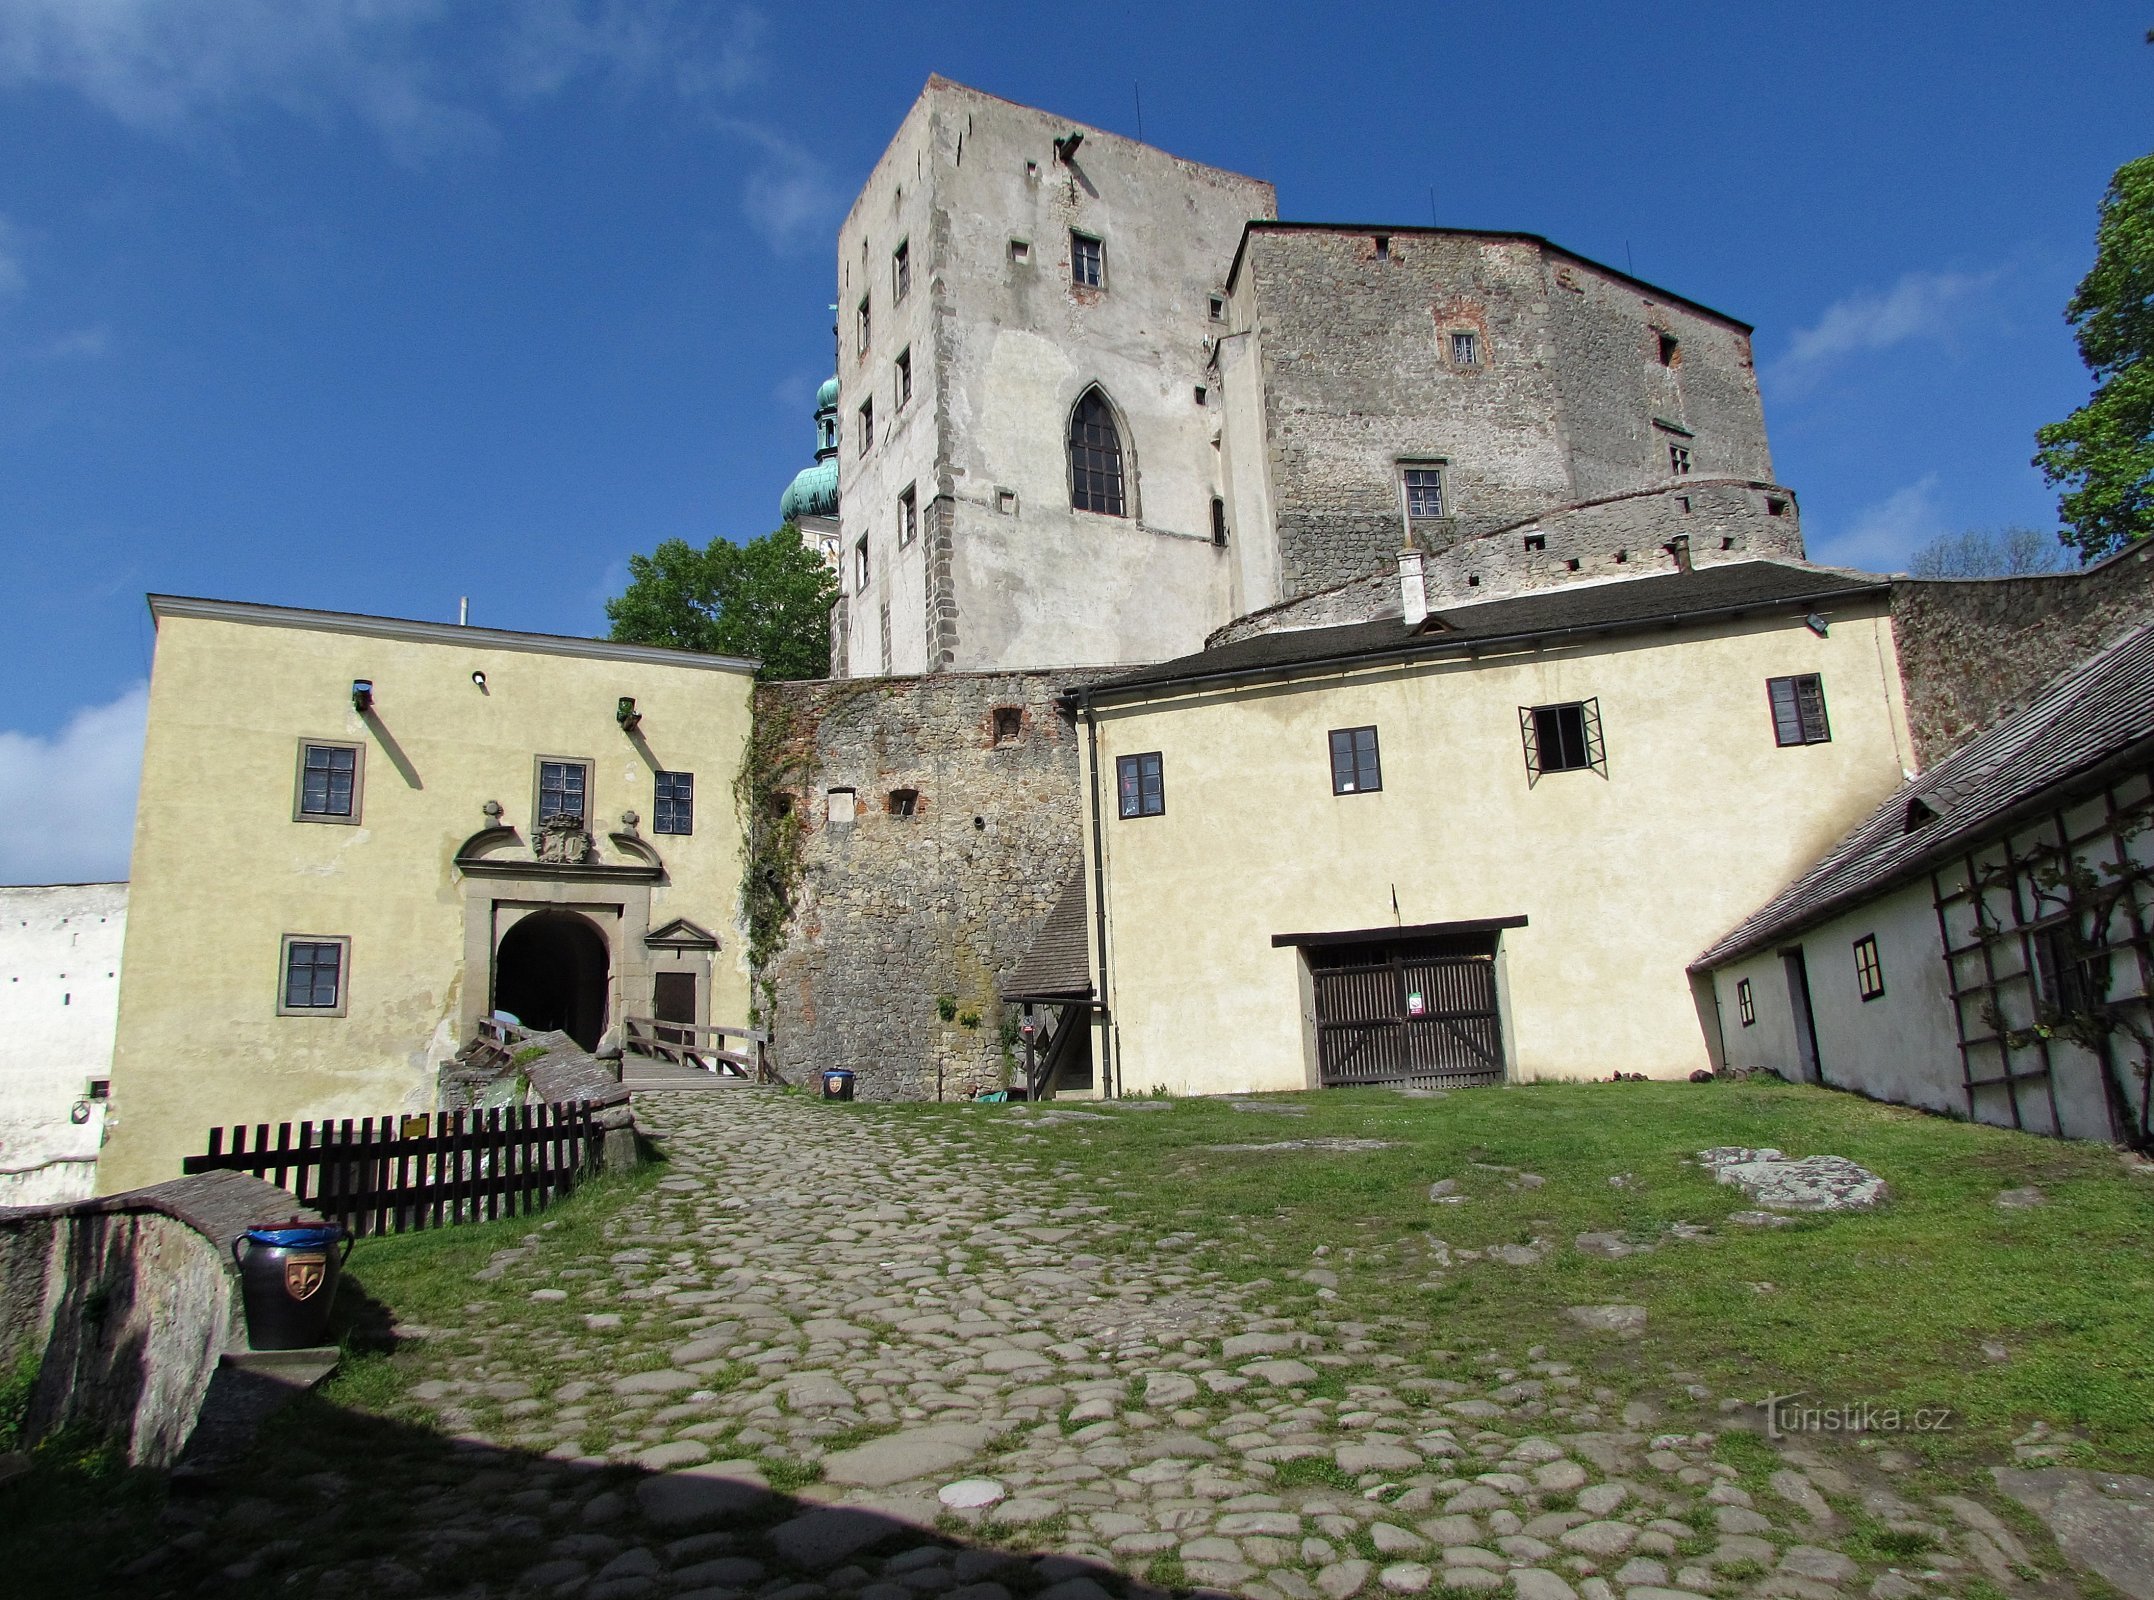 On a tour of Buchlova Castle